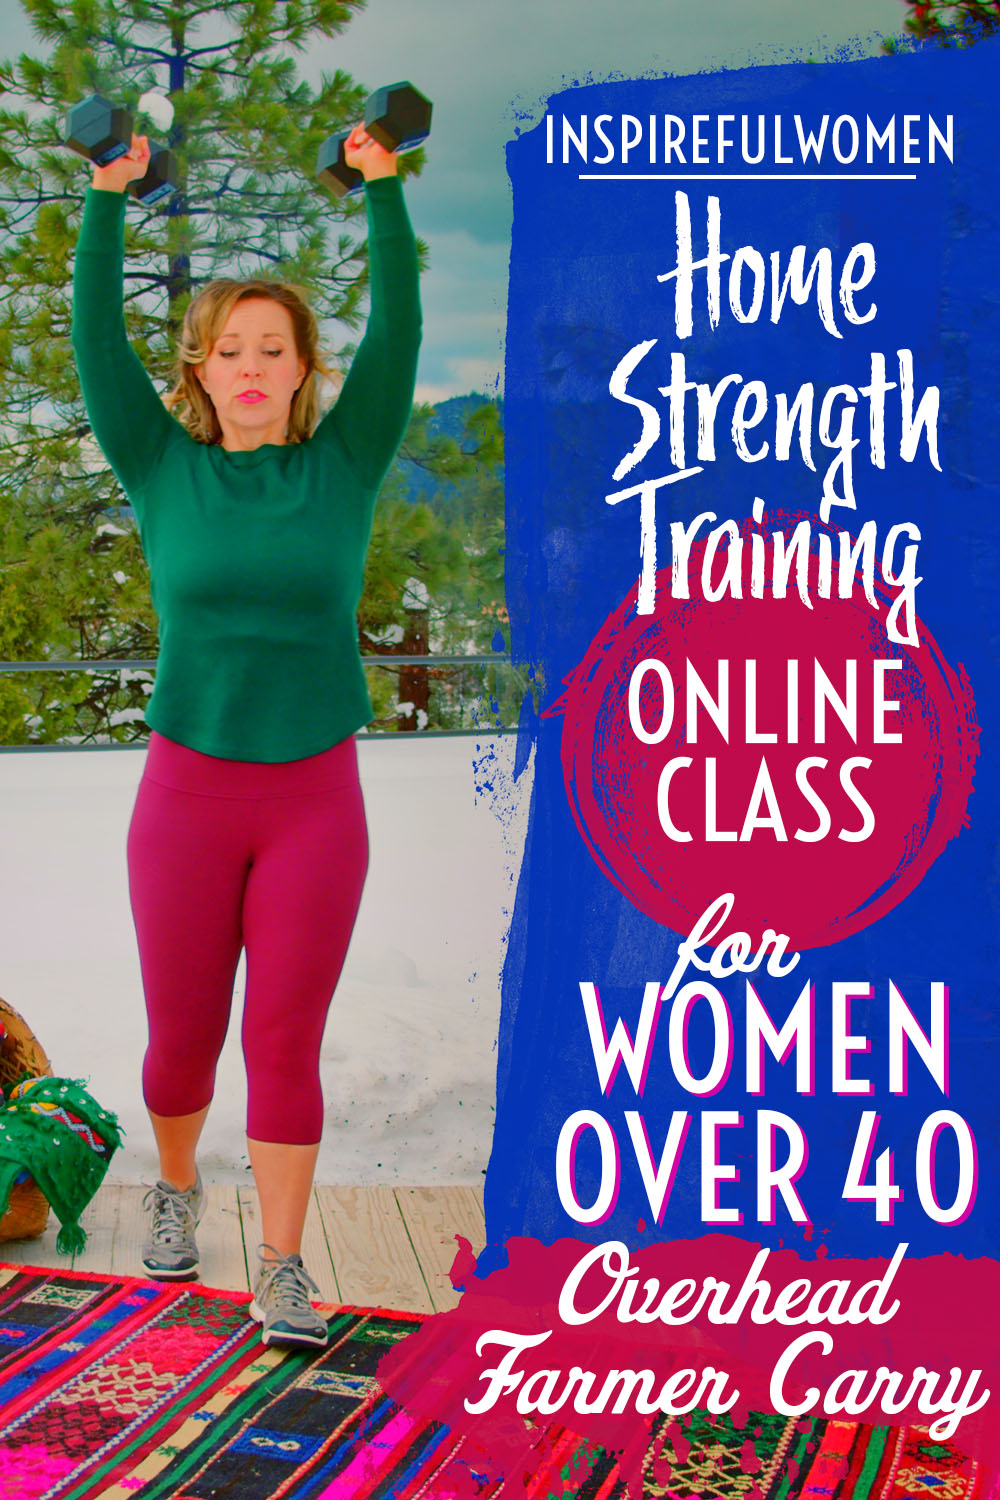 overhead-farmer-carry-dumbbells-total-body-core-exercise-home-resistance-training-women-40+